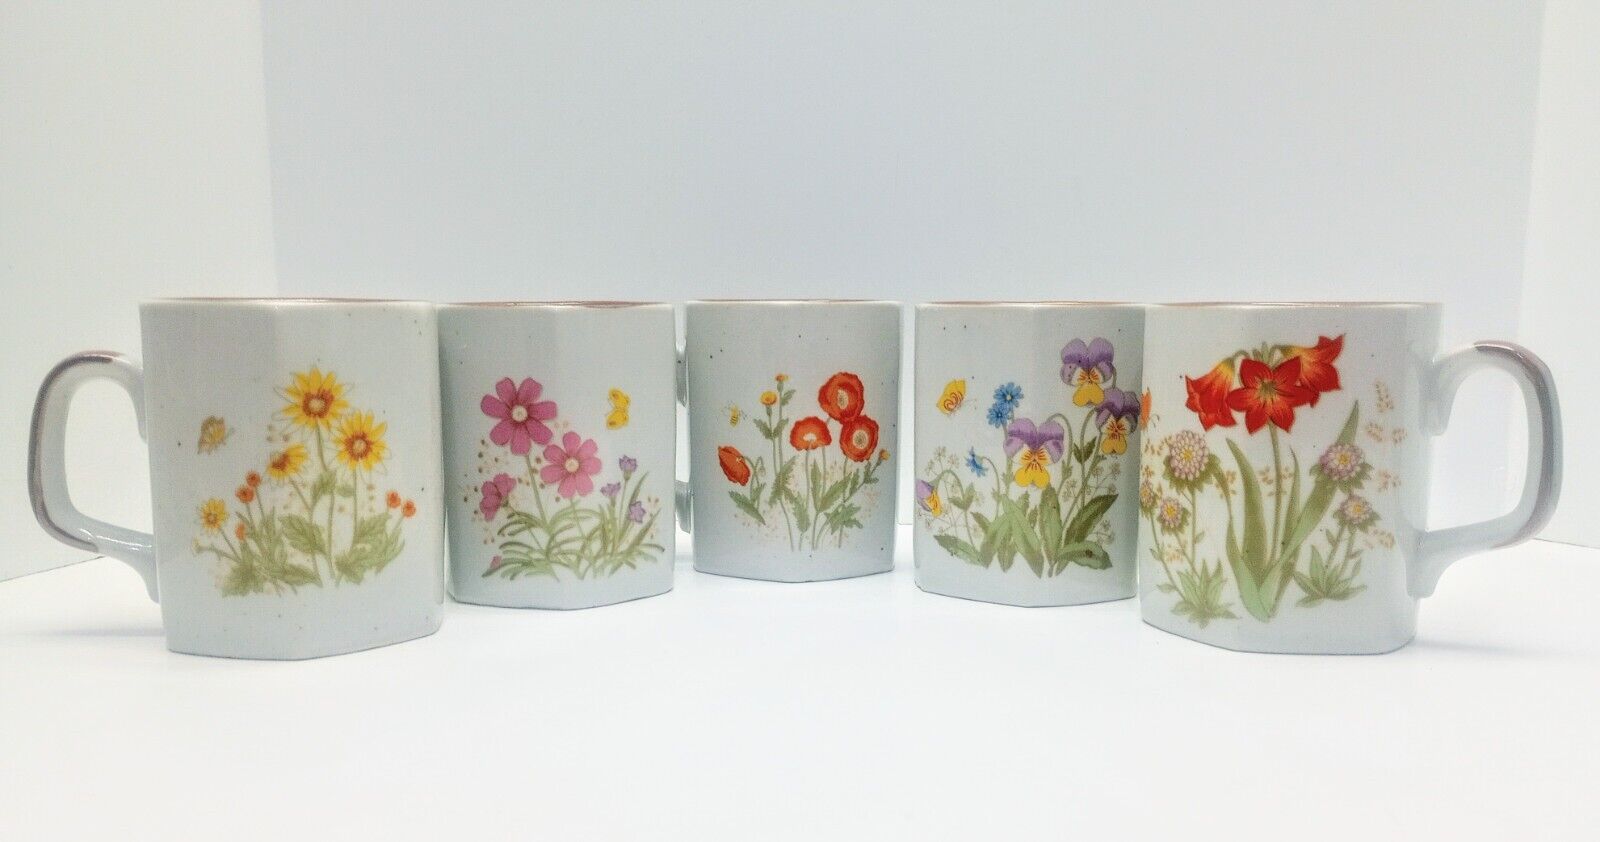 Set of 5 Vintage Speckled Stoneware Hexagon Coffee Mugs Flowers Poppies Pansies